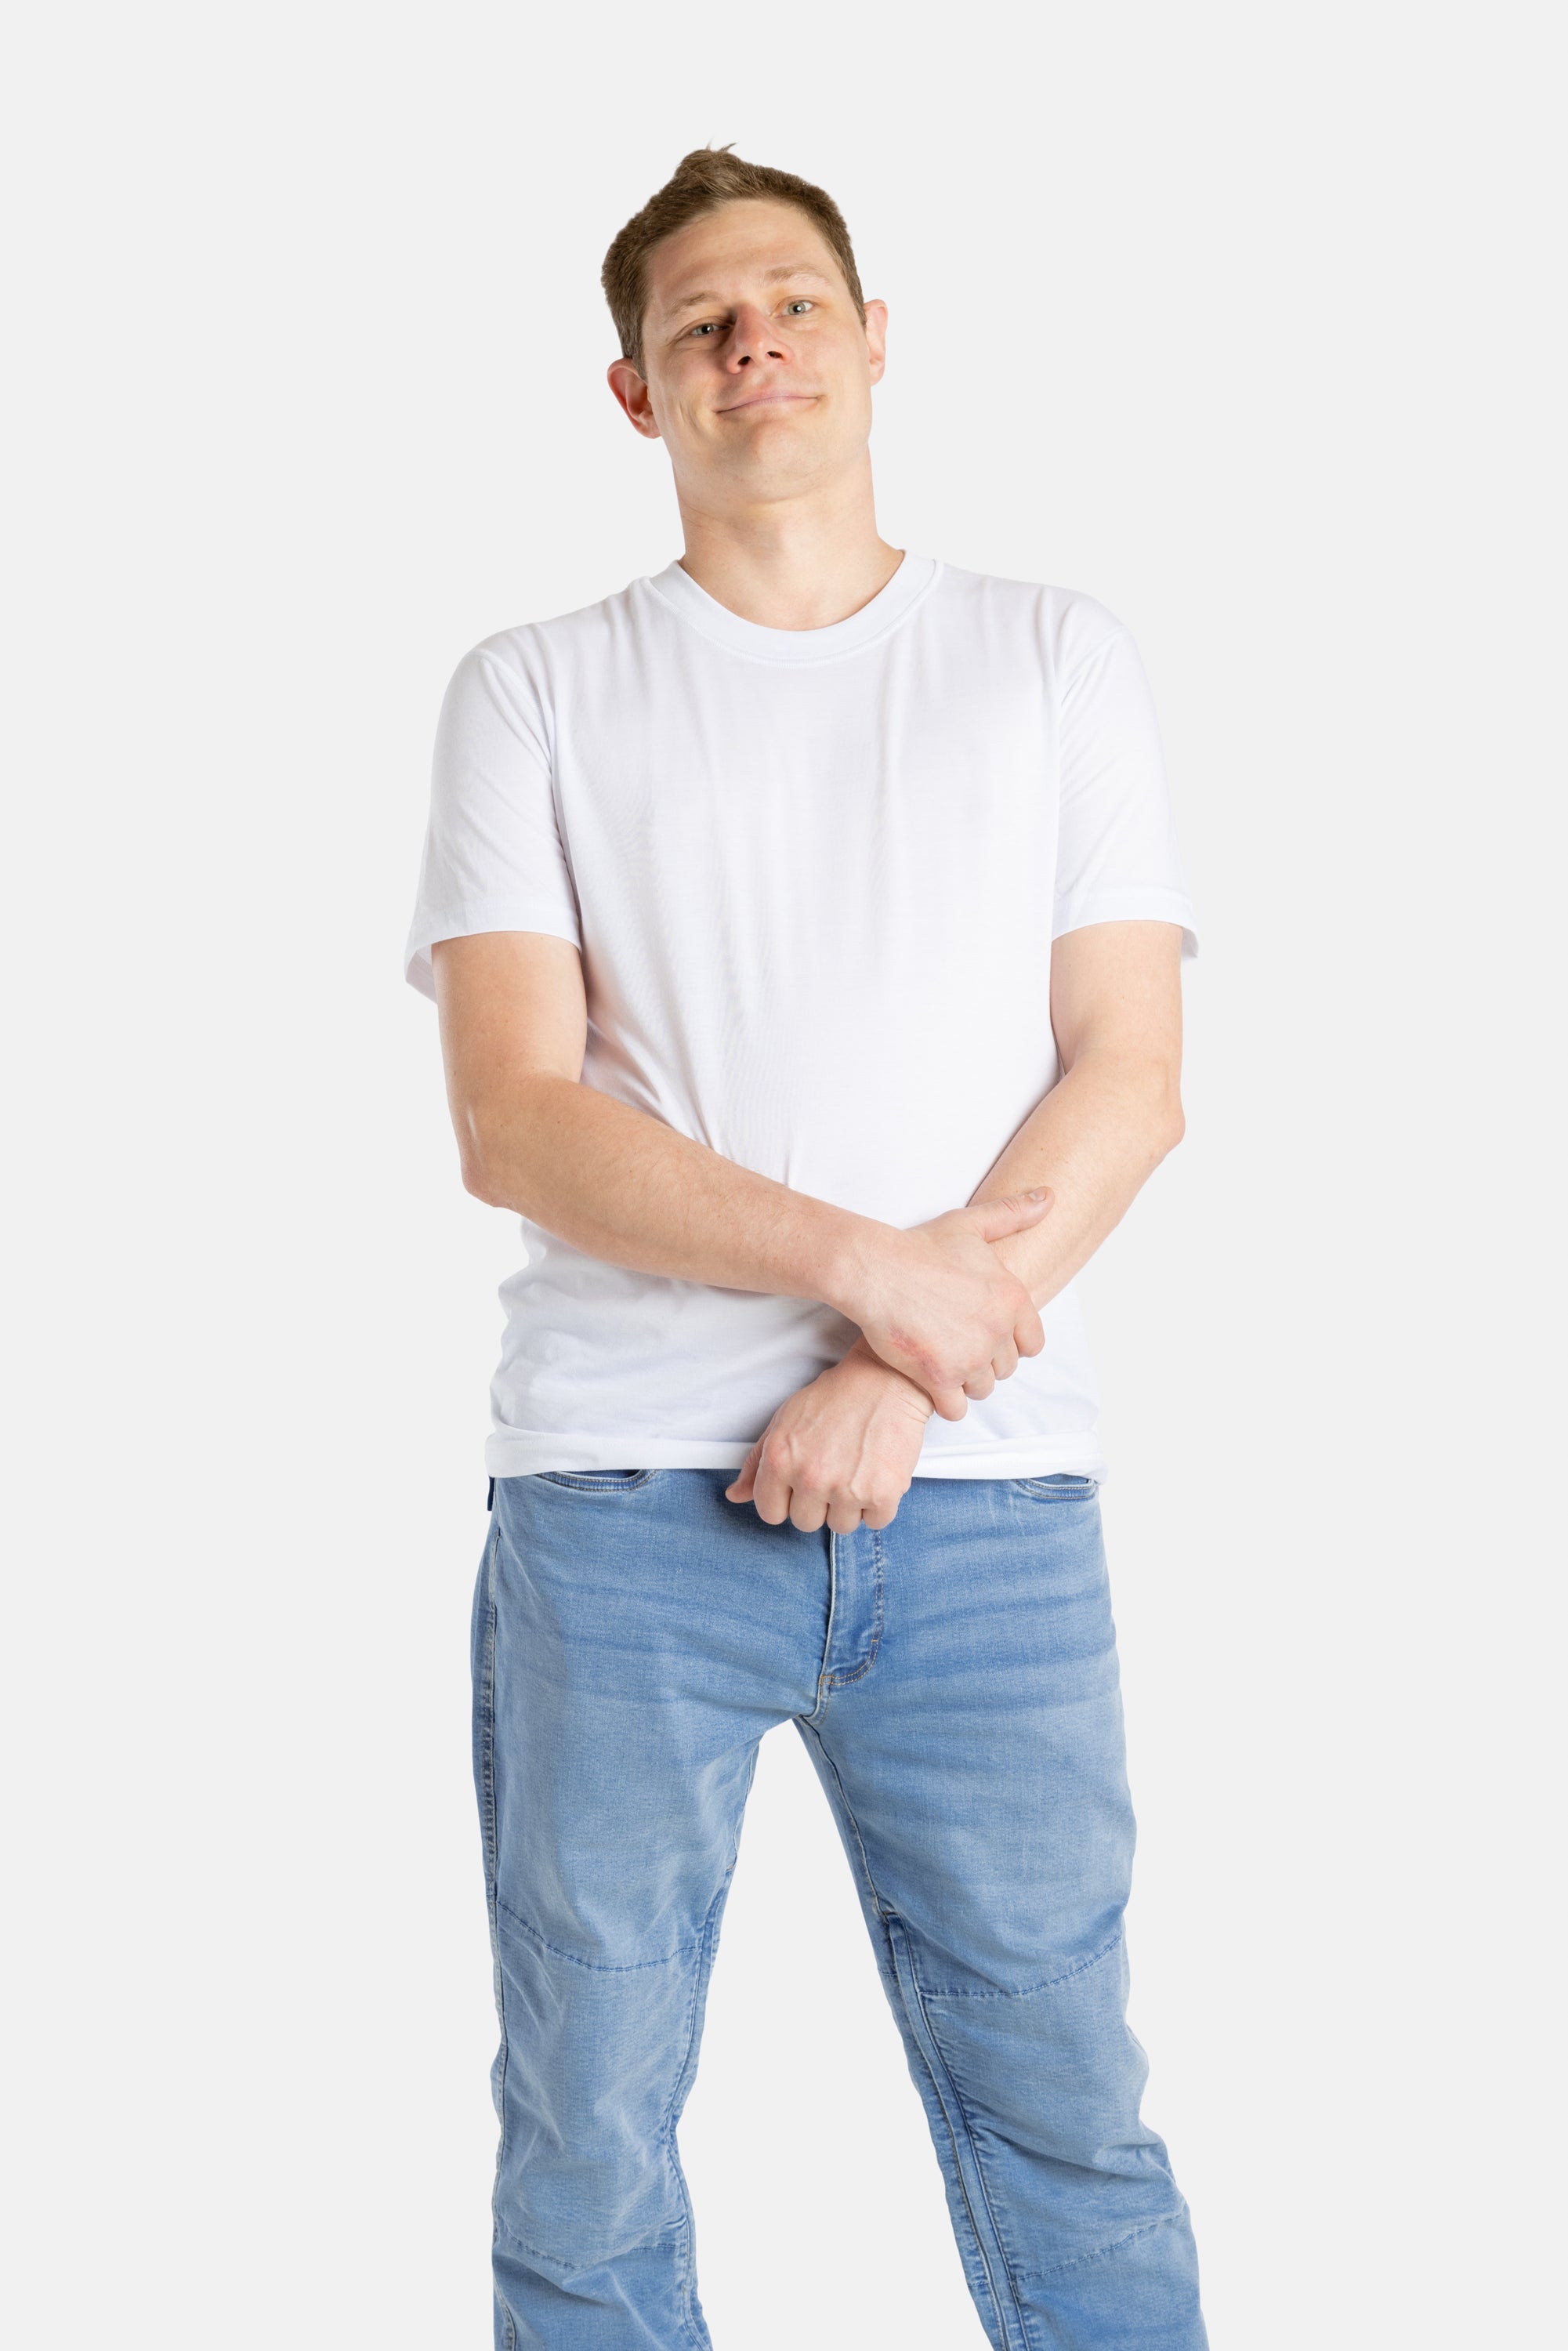 A white man with short brown hair wears a white t-shirt.